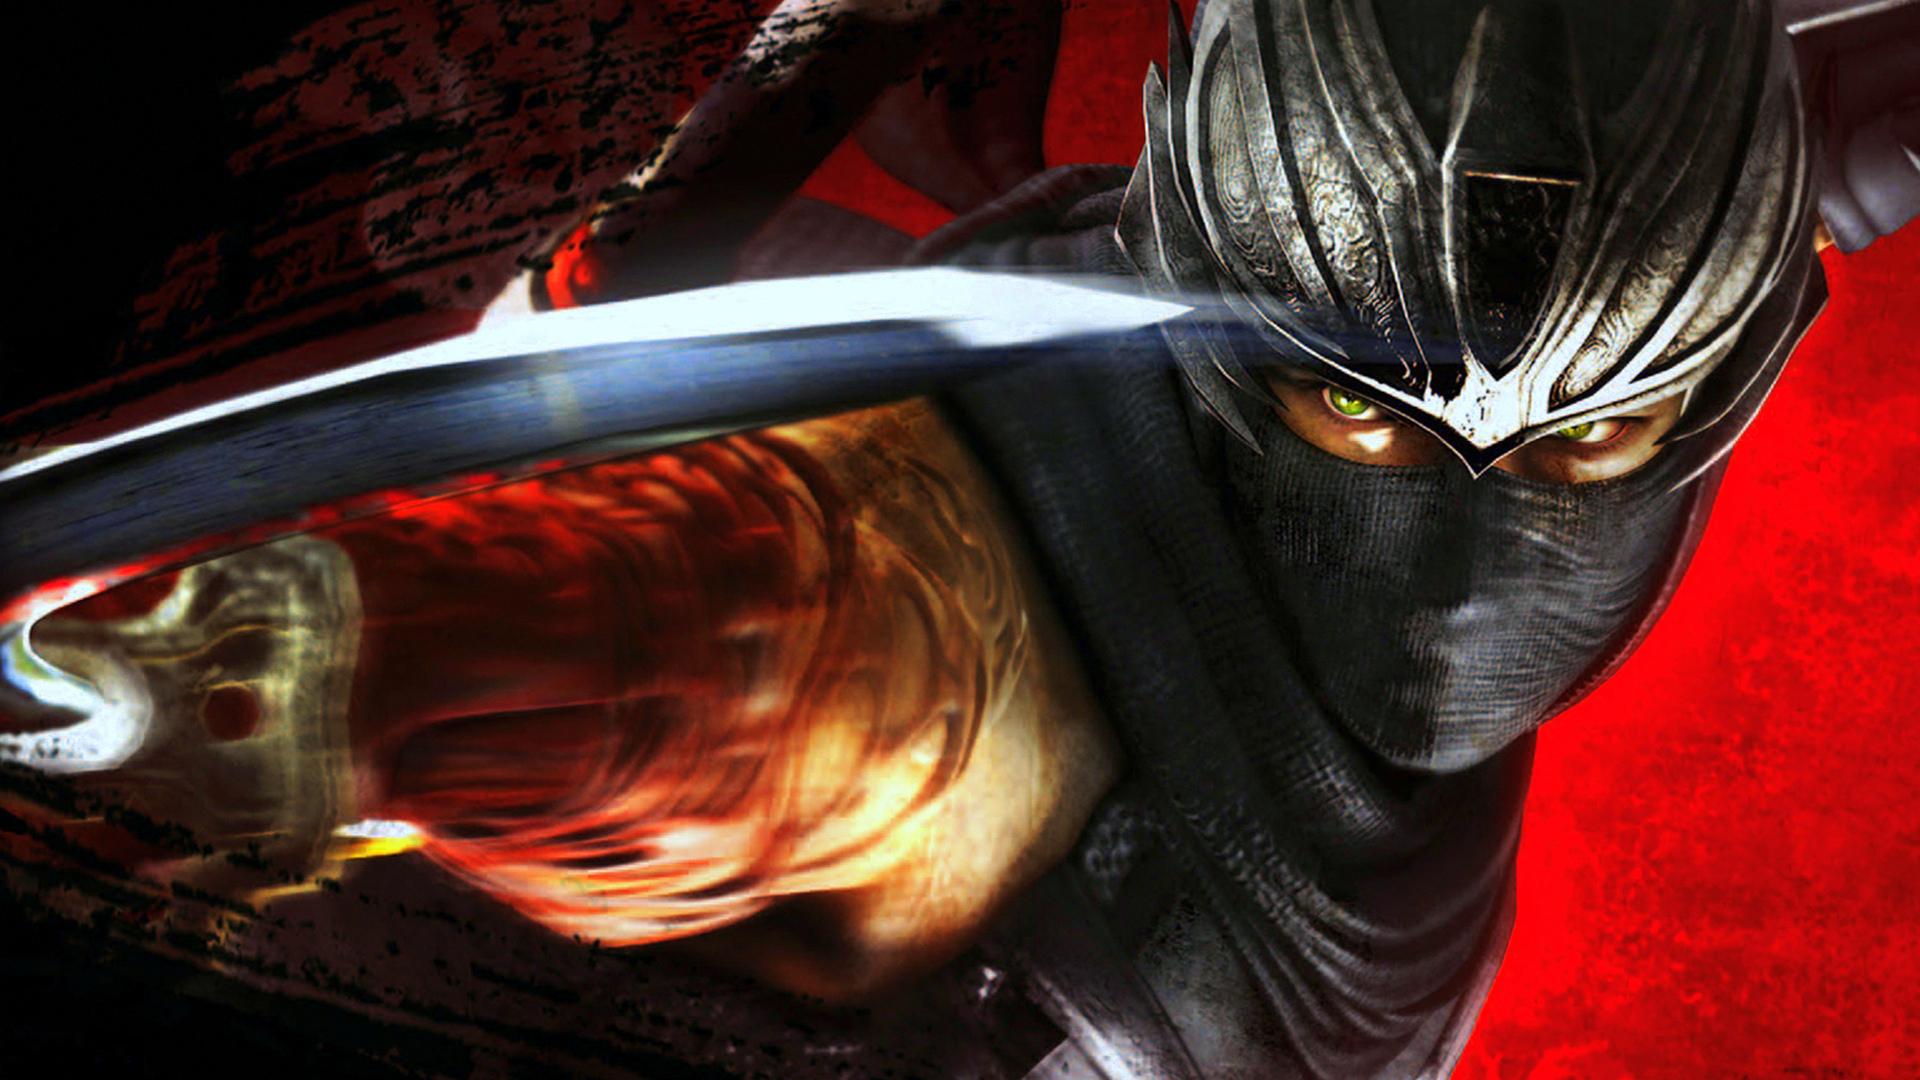 Ninja Gaiden 3 Razor s Edge at 2048 x 2048 iPad size wallpapers HD quality